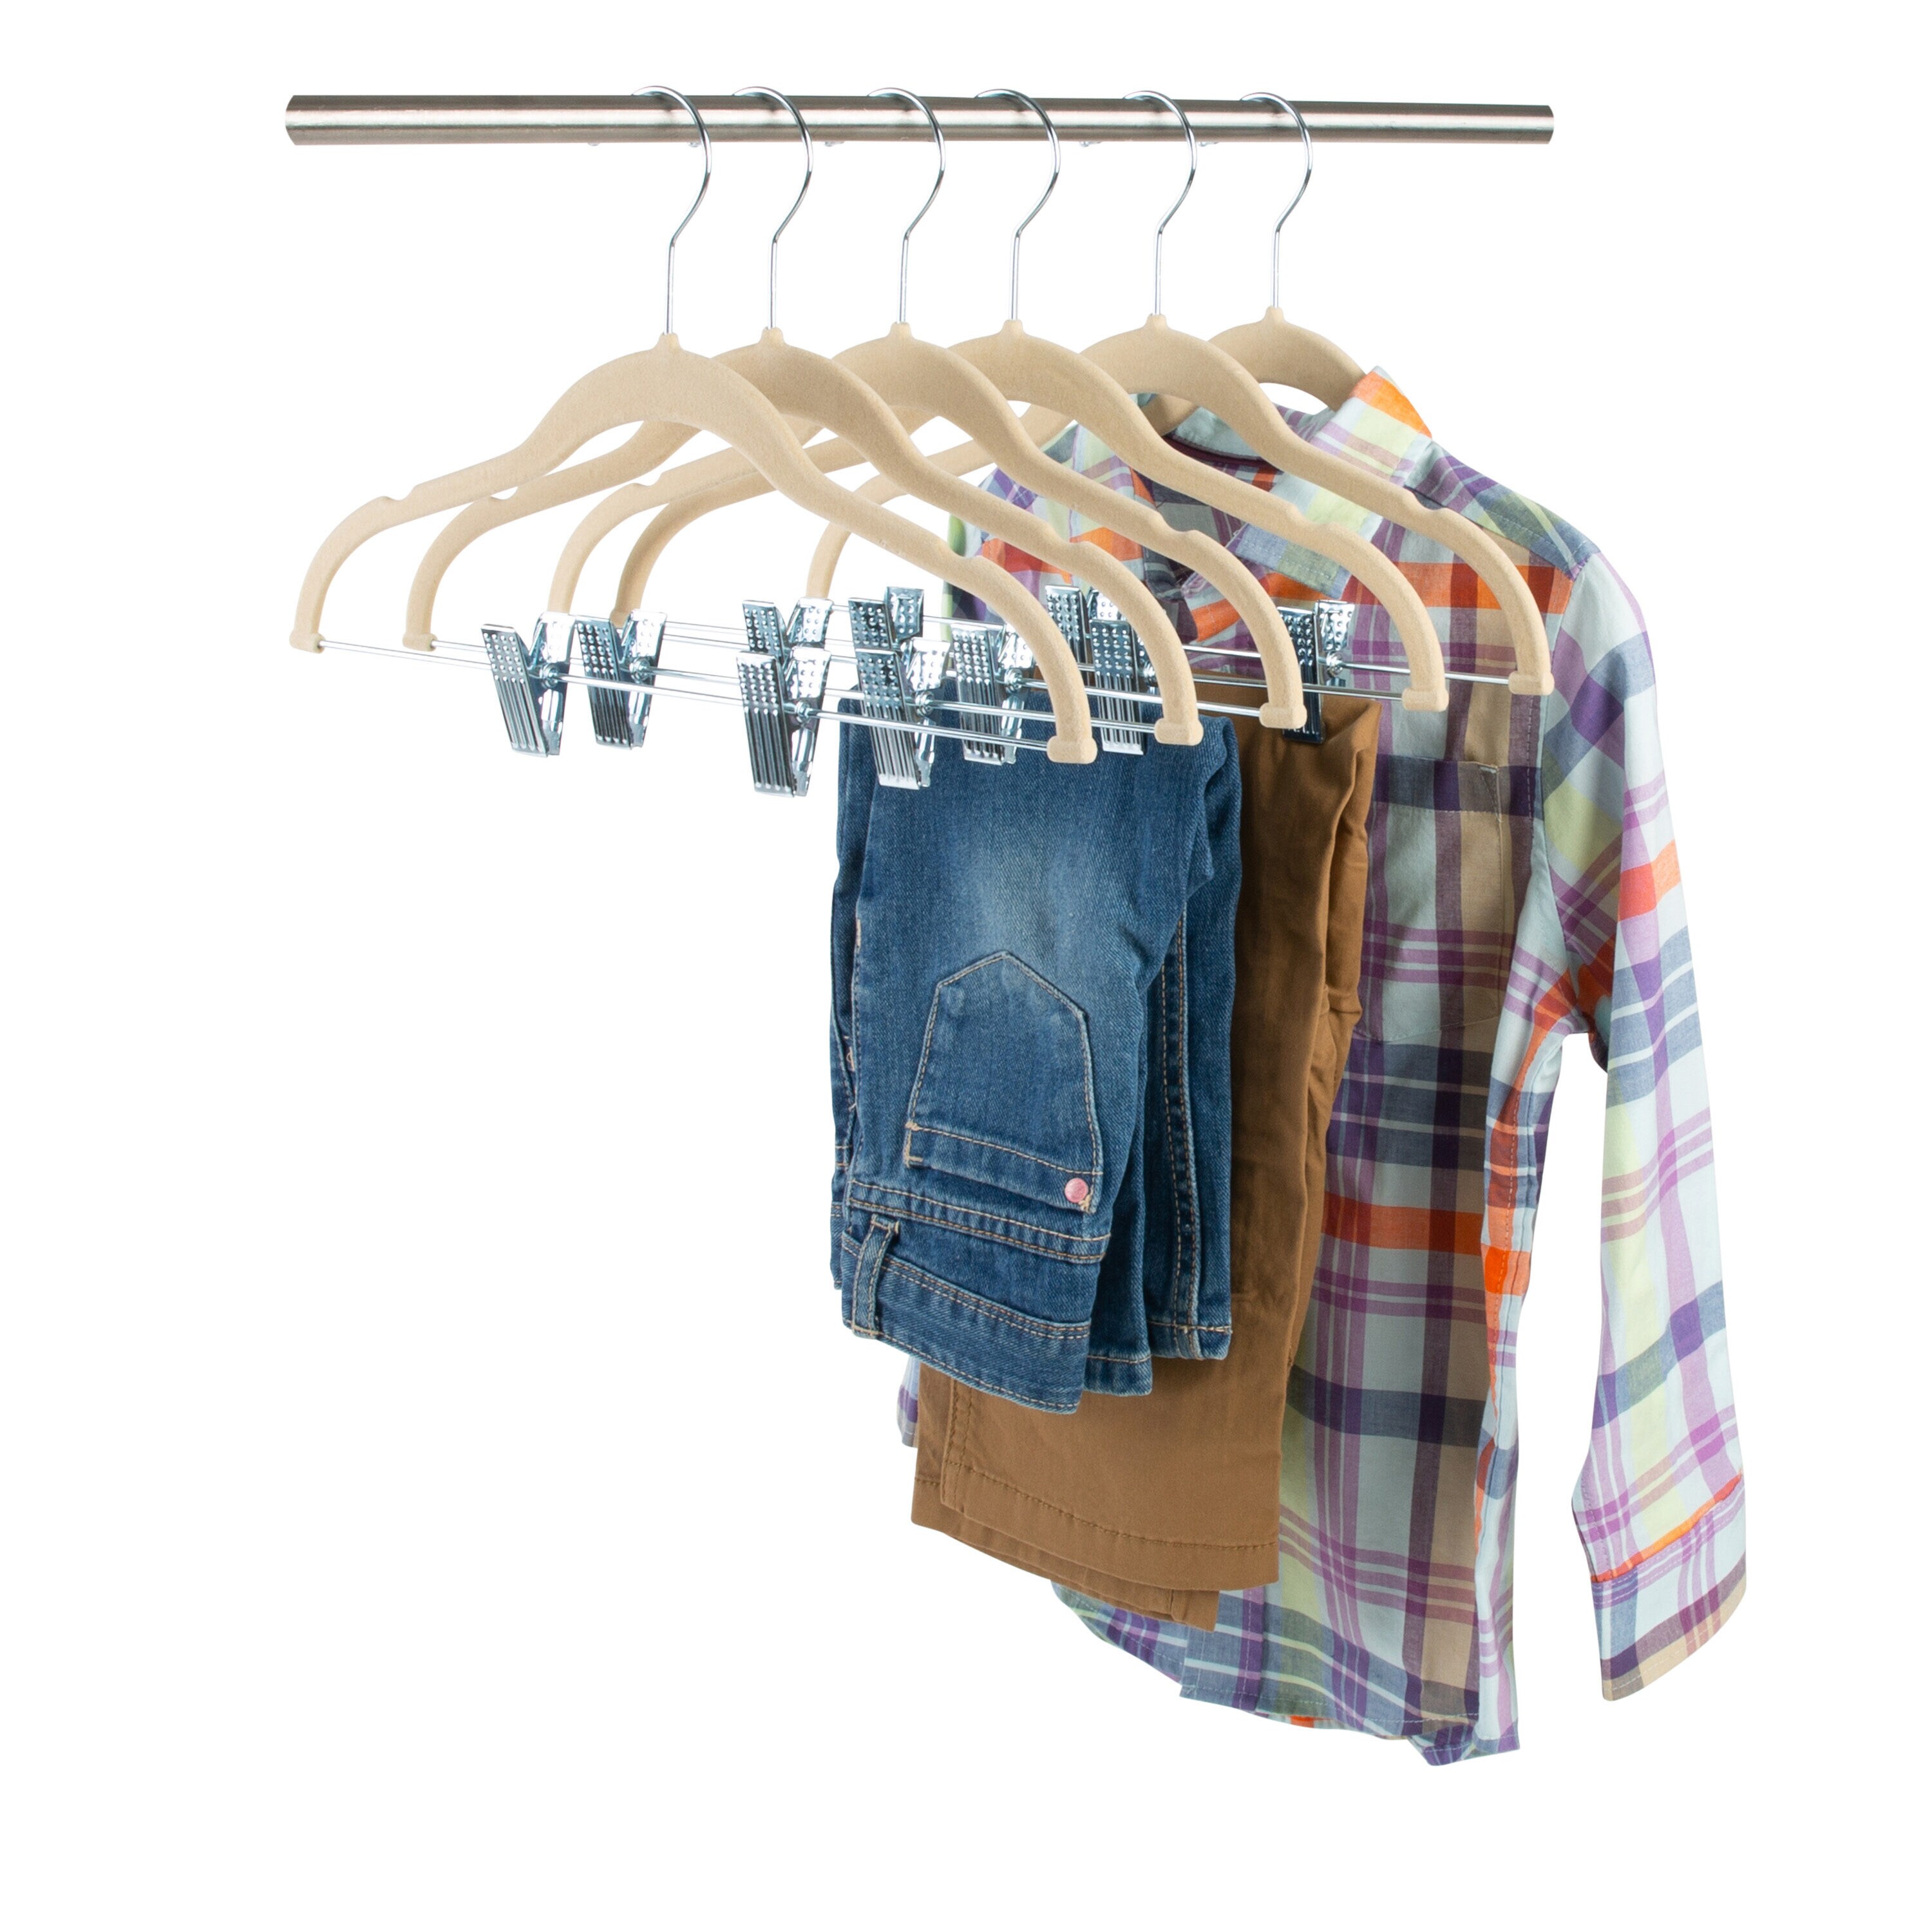 Simplify 10-Pack Plastic Non-slip Grip Clothing Hanger (Blue) in